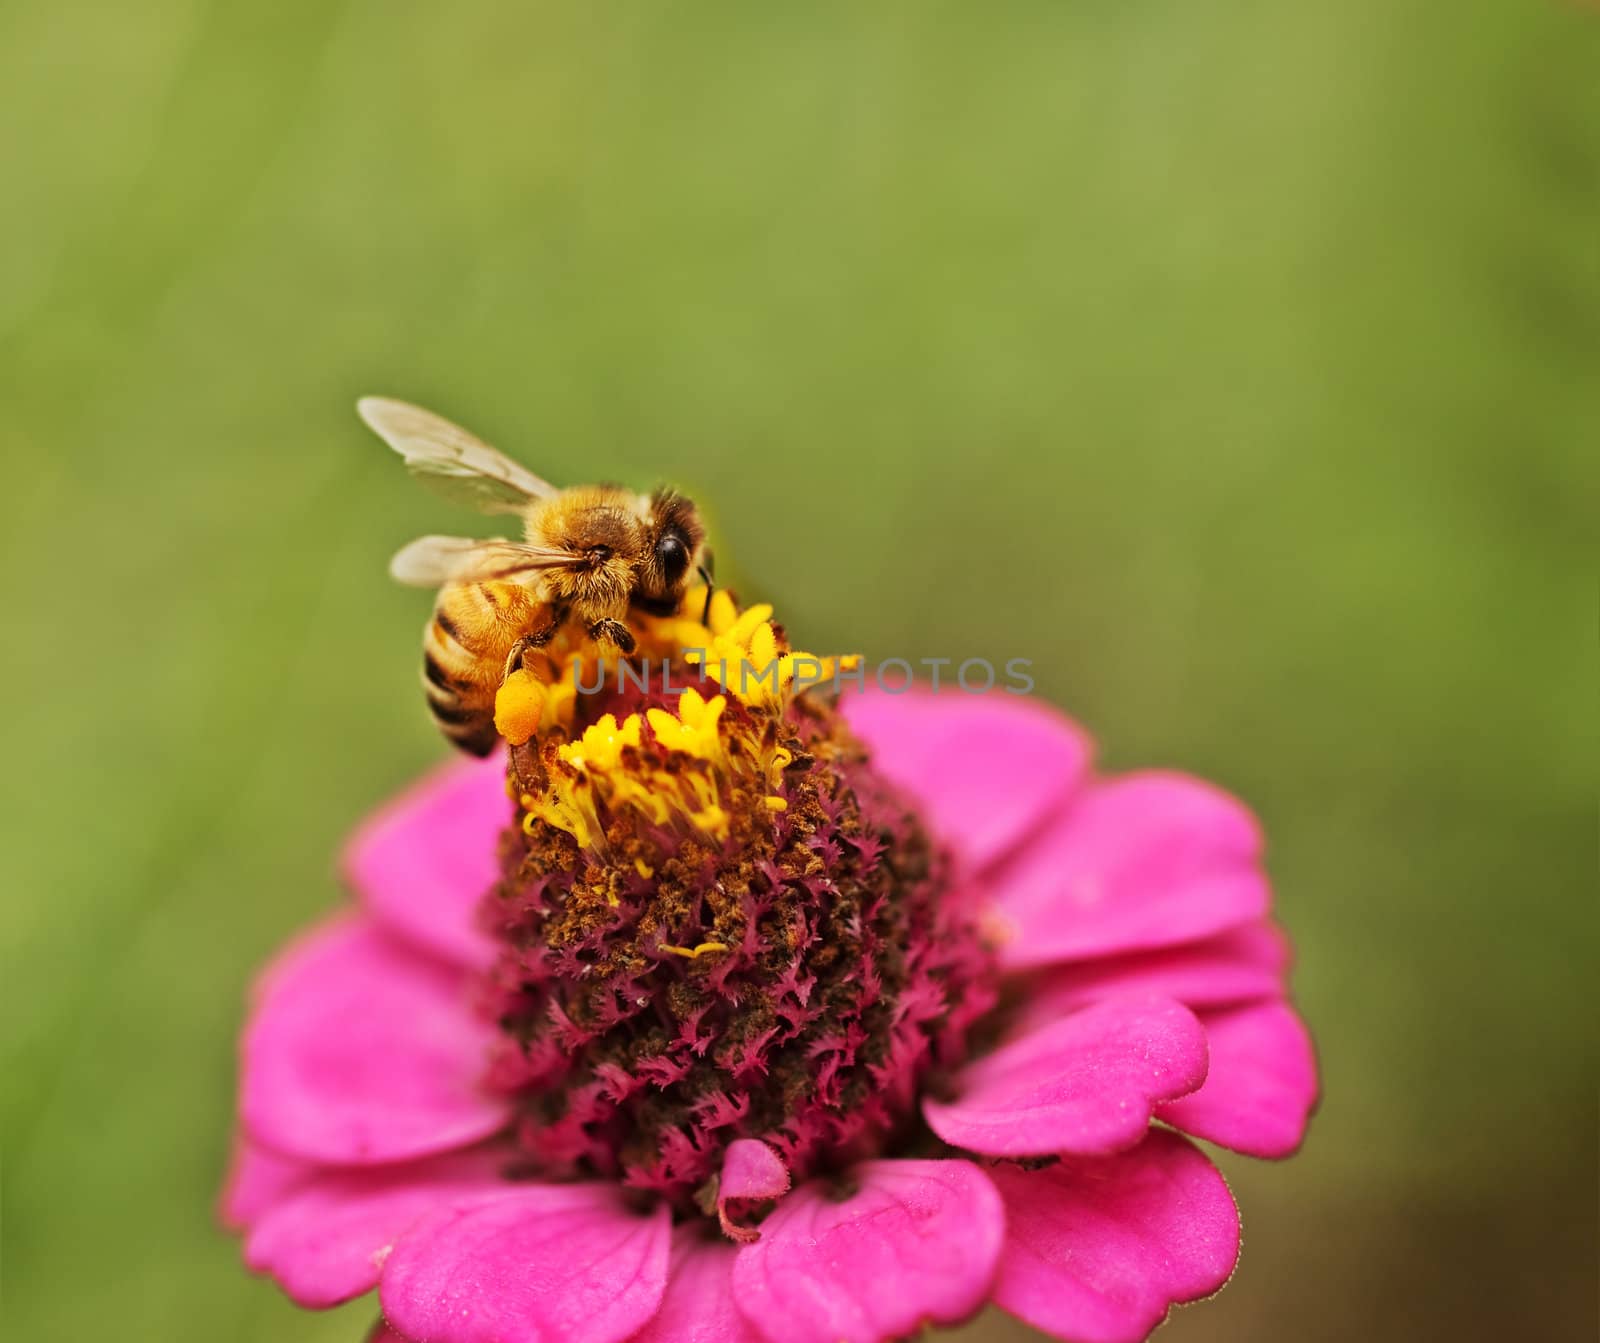 Autumn wild honey bee pollinating pink Zinnia flower by sherj